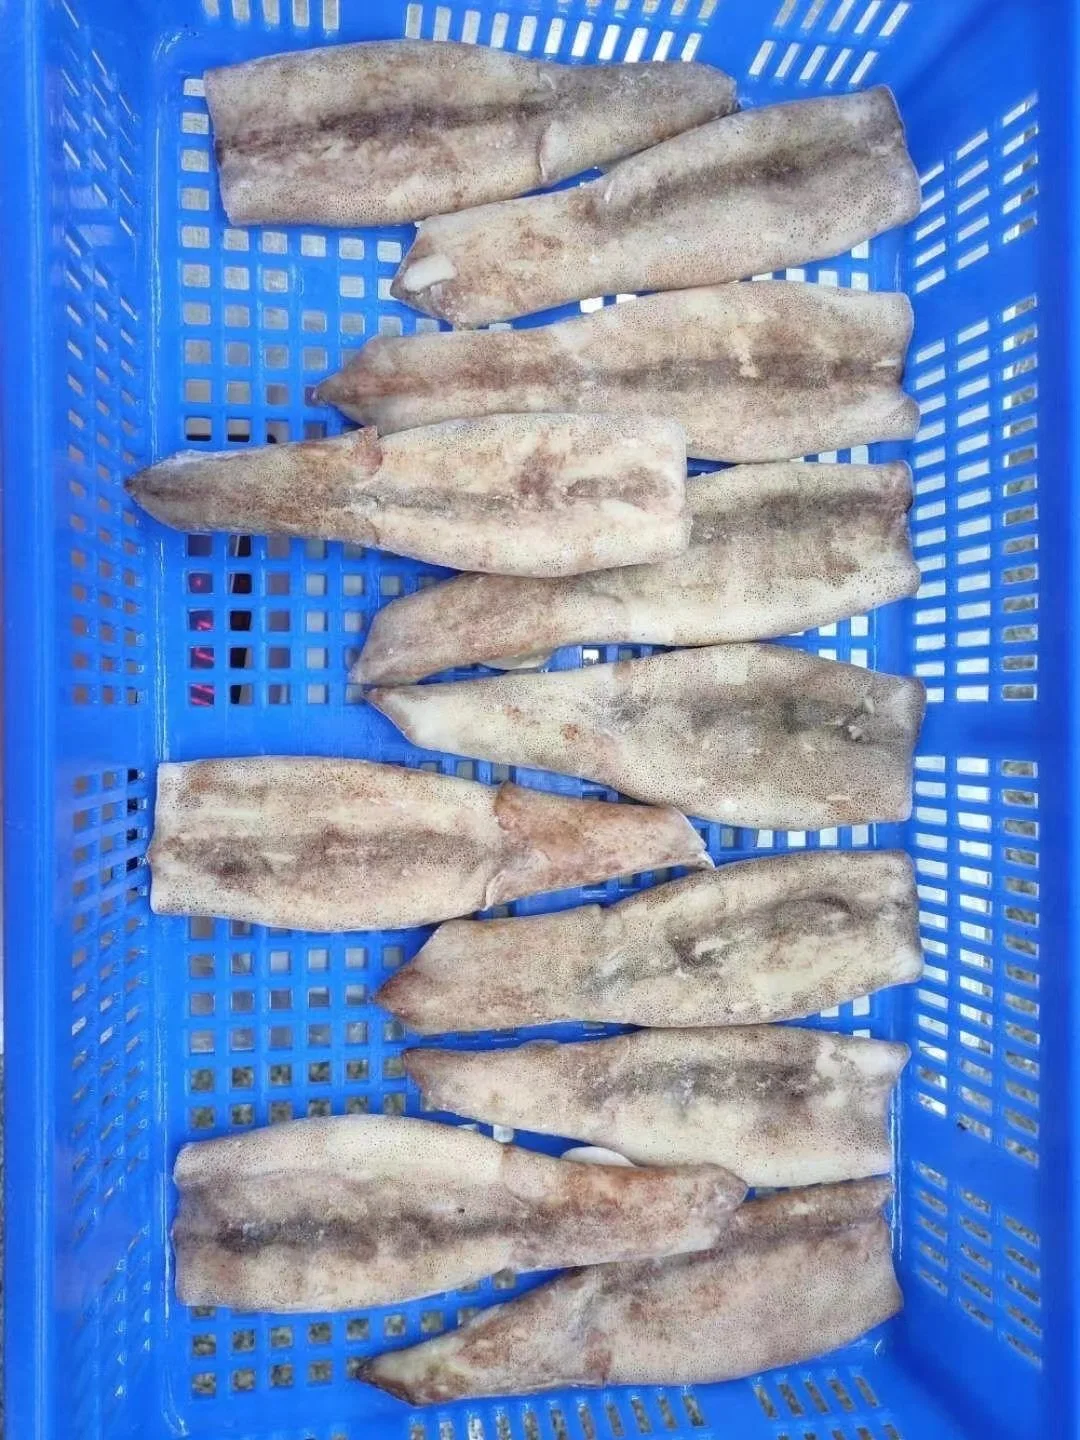 Gefrorene Tintenfisch/Calamari Tube mit Haut an